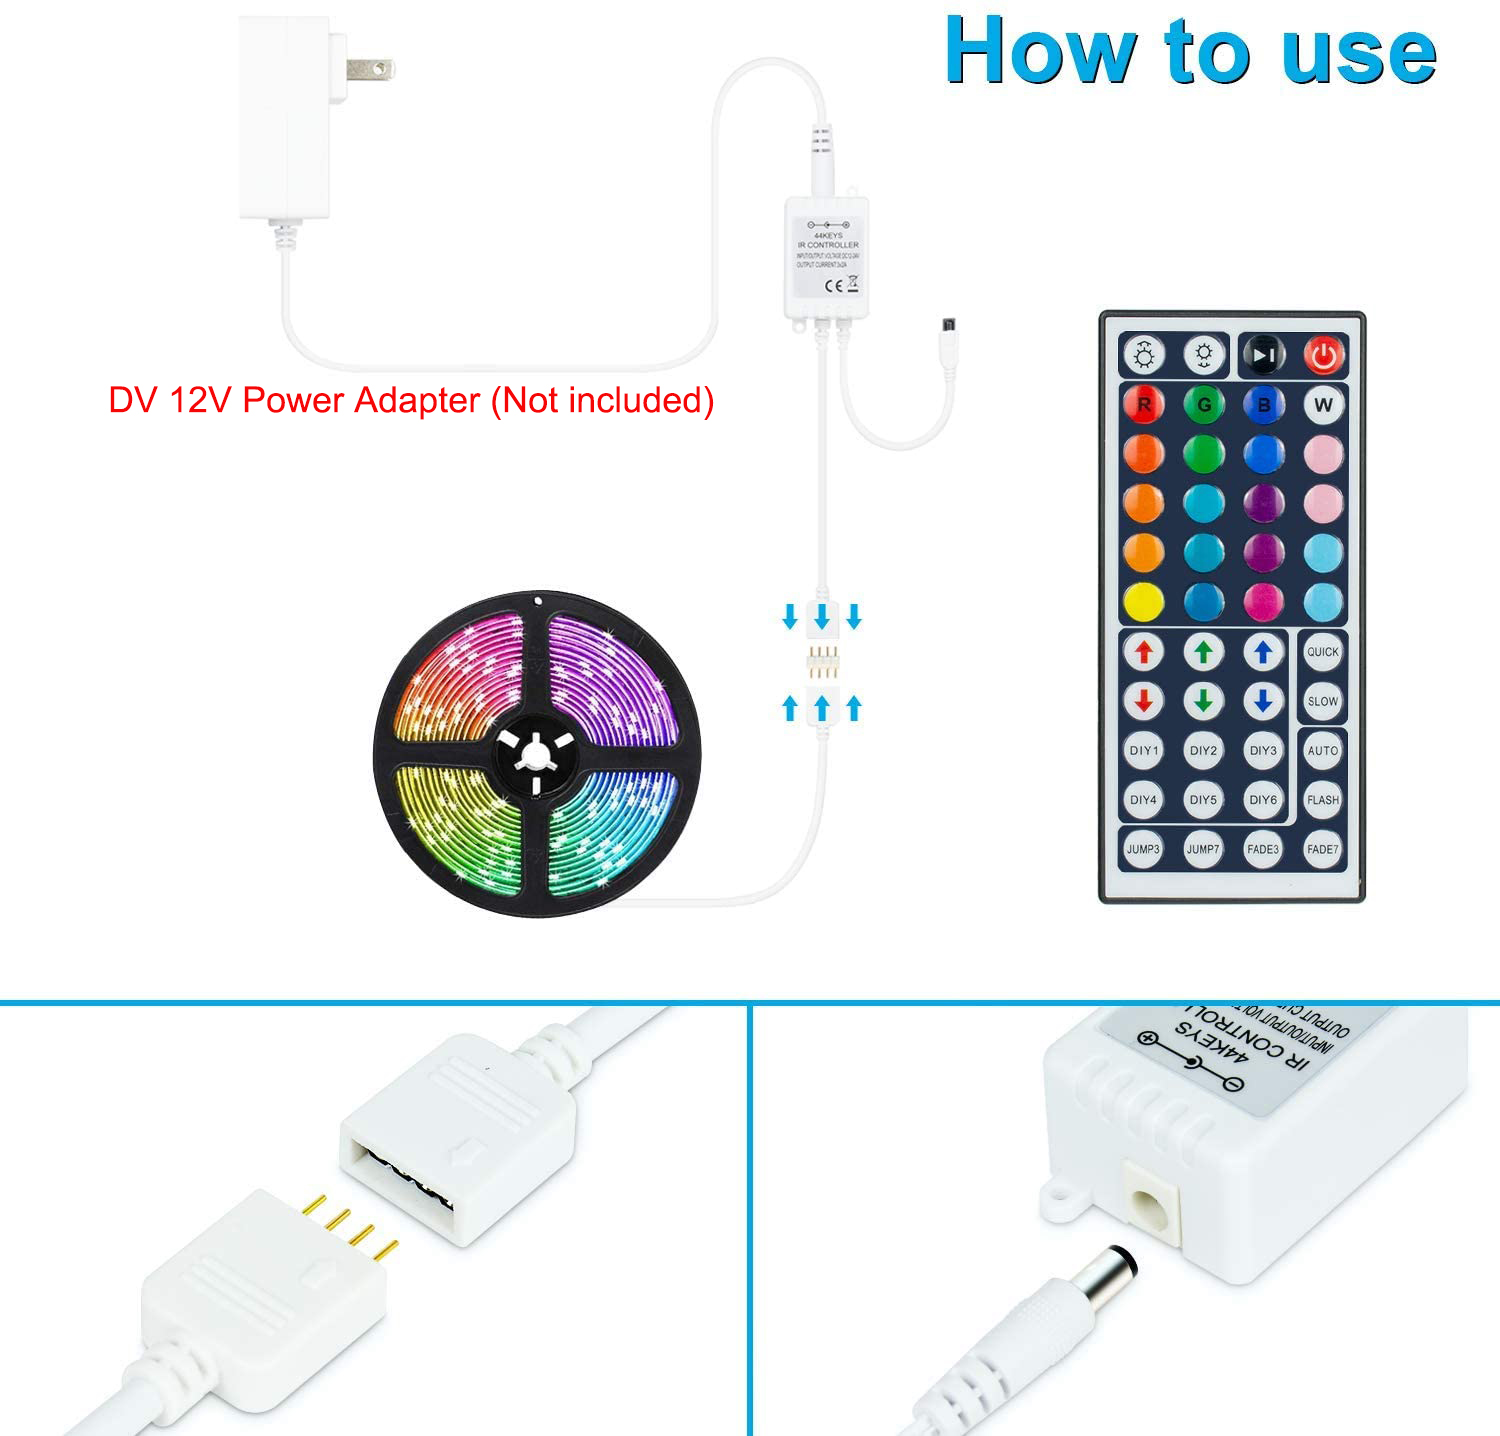 HF-MCLED44: Led Light Remote Controller Kit, 1-Port 44 Keys Wireless IR Remote with Receiver for RGB 5050 2835 LED Strip Lights